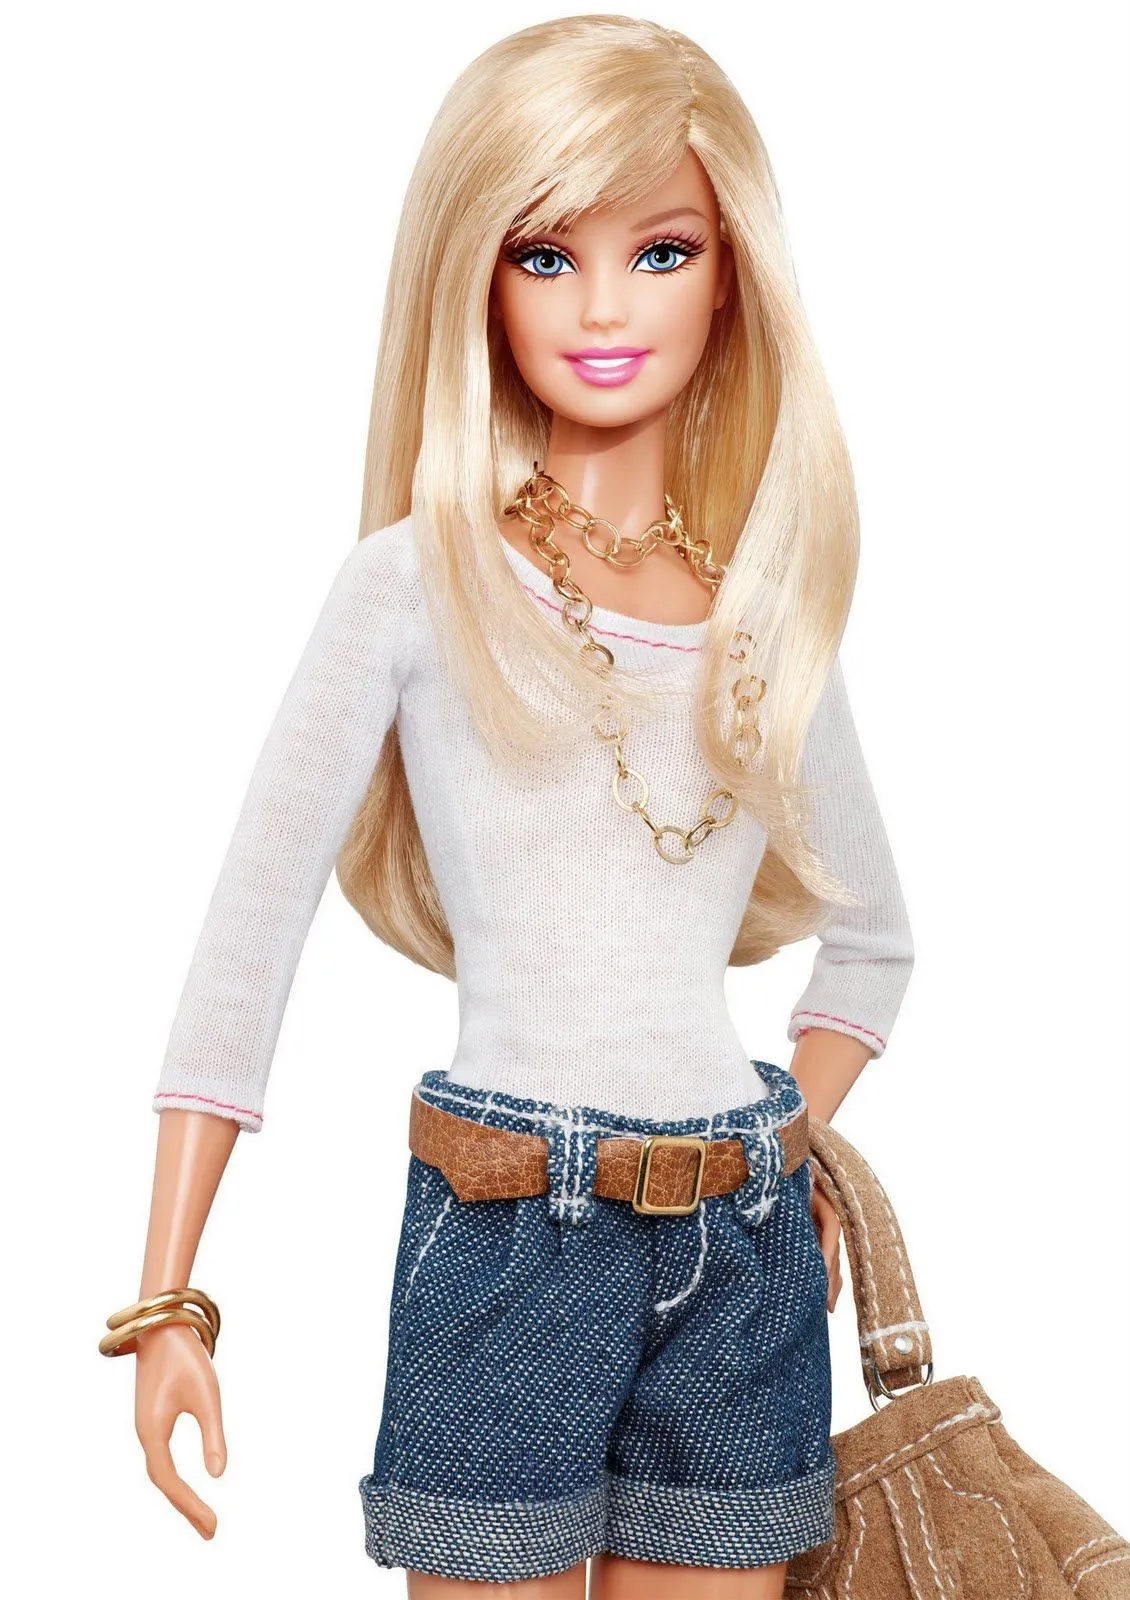 Barbie Lovely: ¡Nuevas imagenes de Barbie!